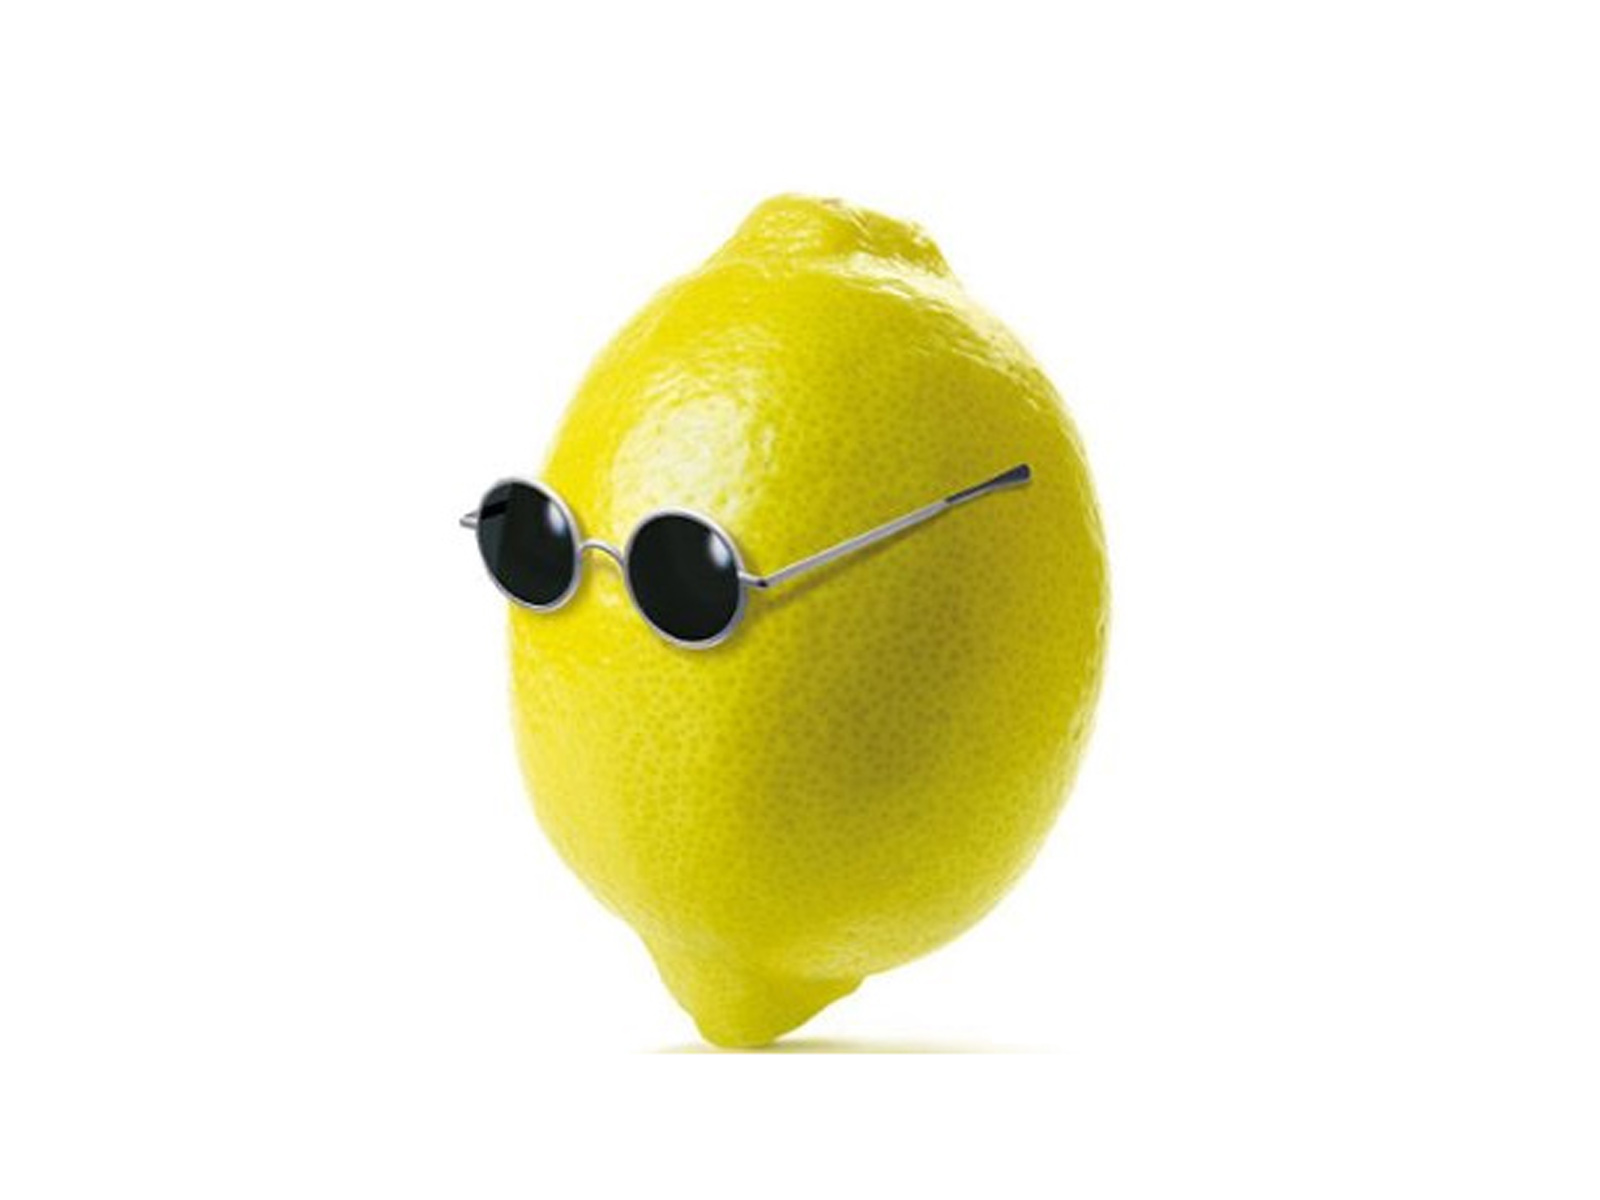 Funny Lemon Wallpaper Image To